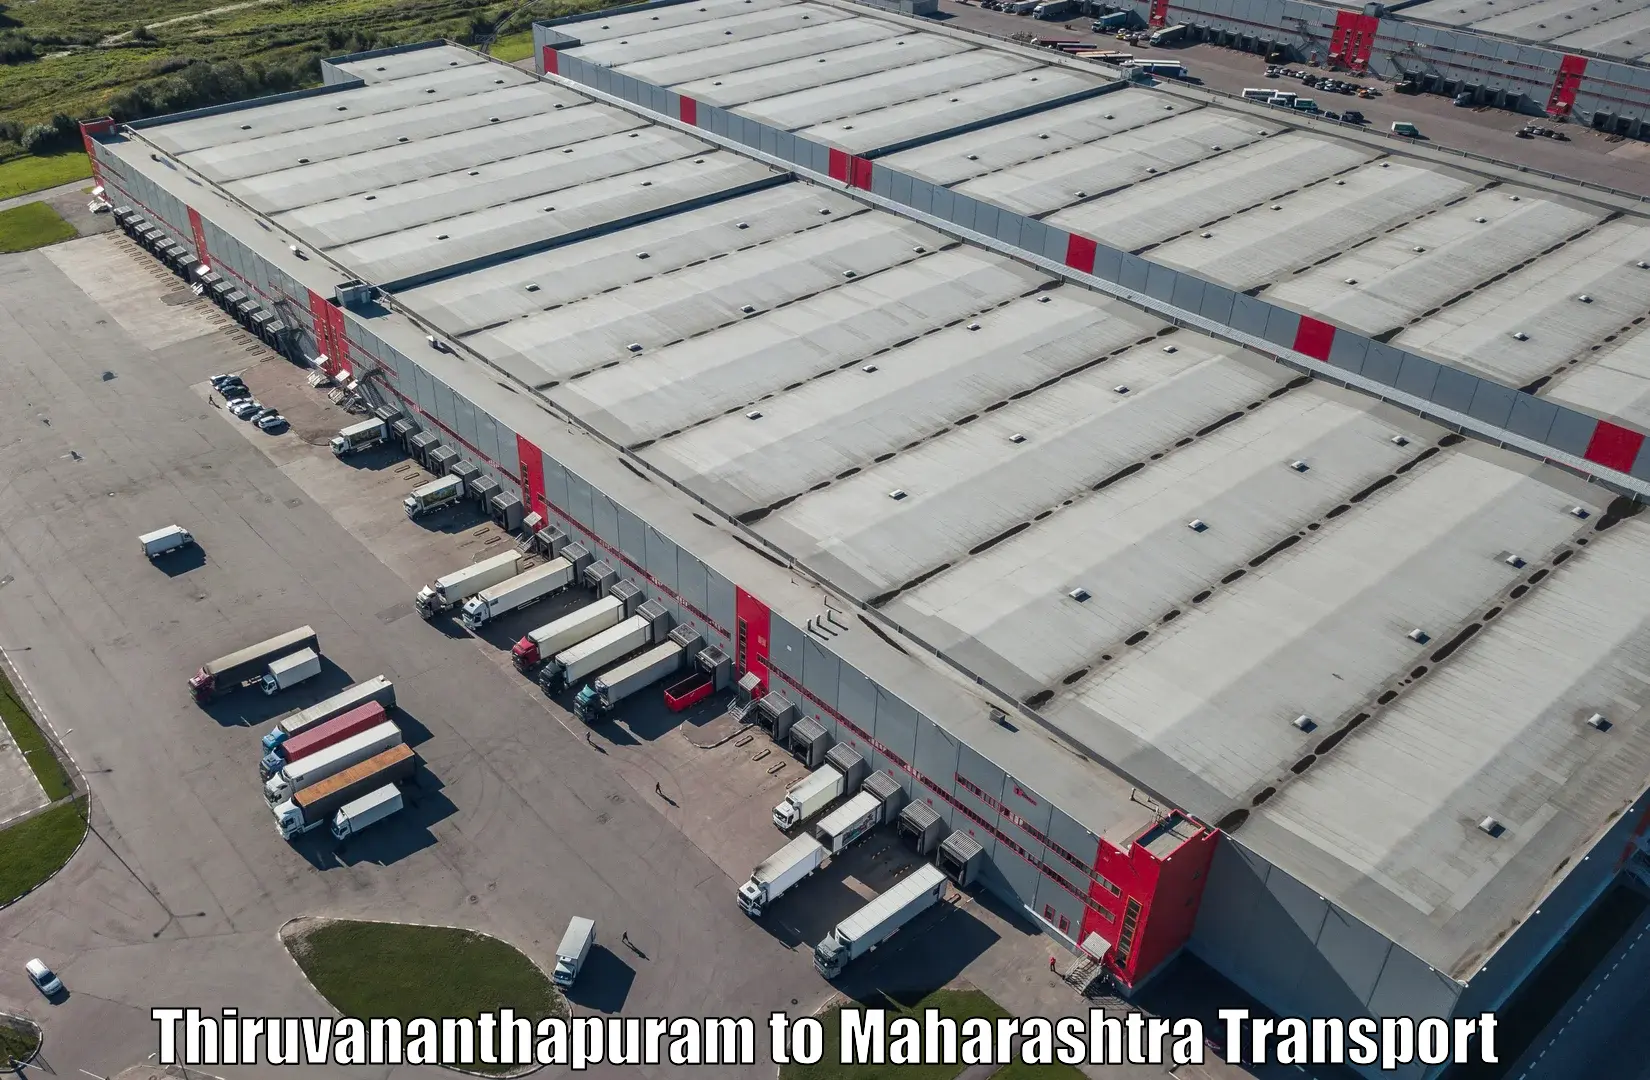 Truck transport companies in India Thiruvananthapuram to Kopargaon